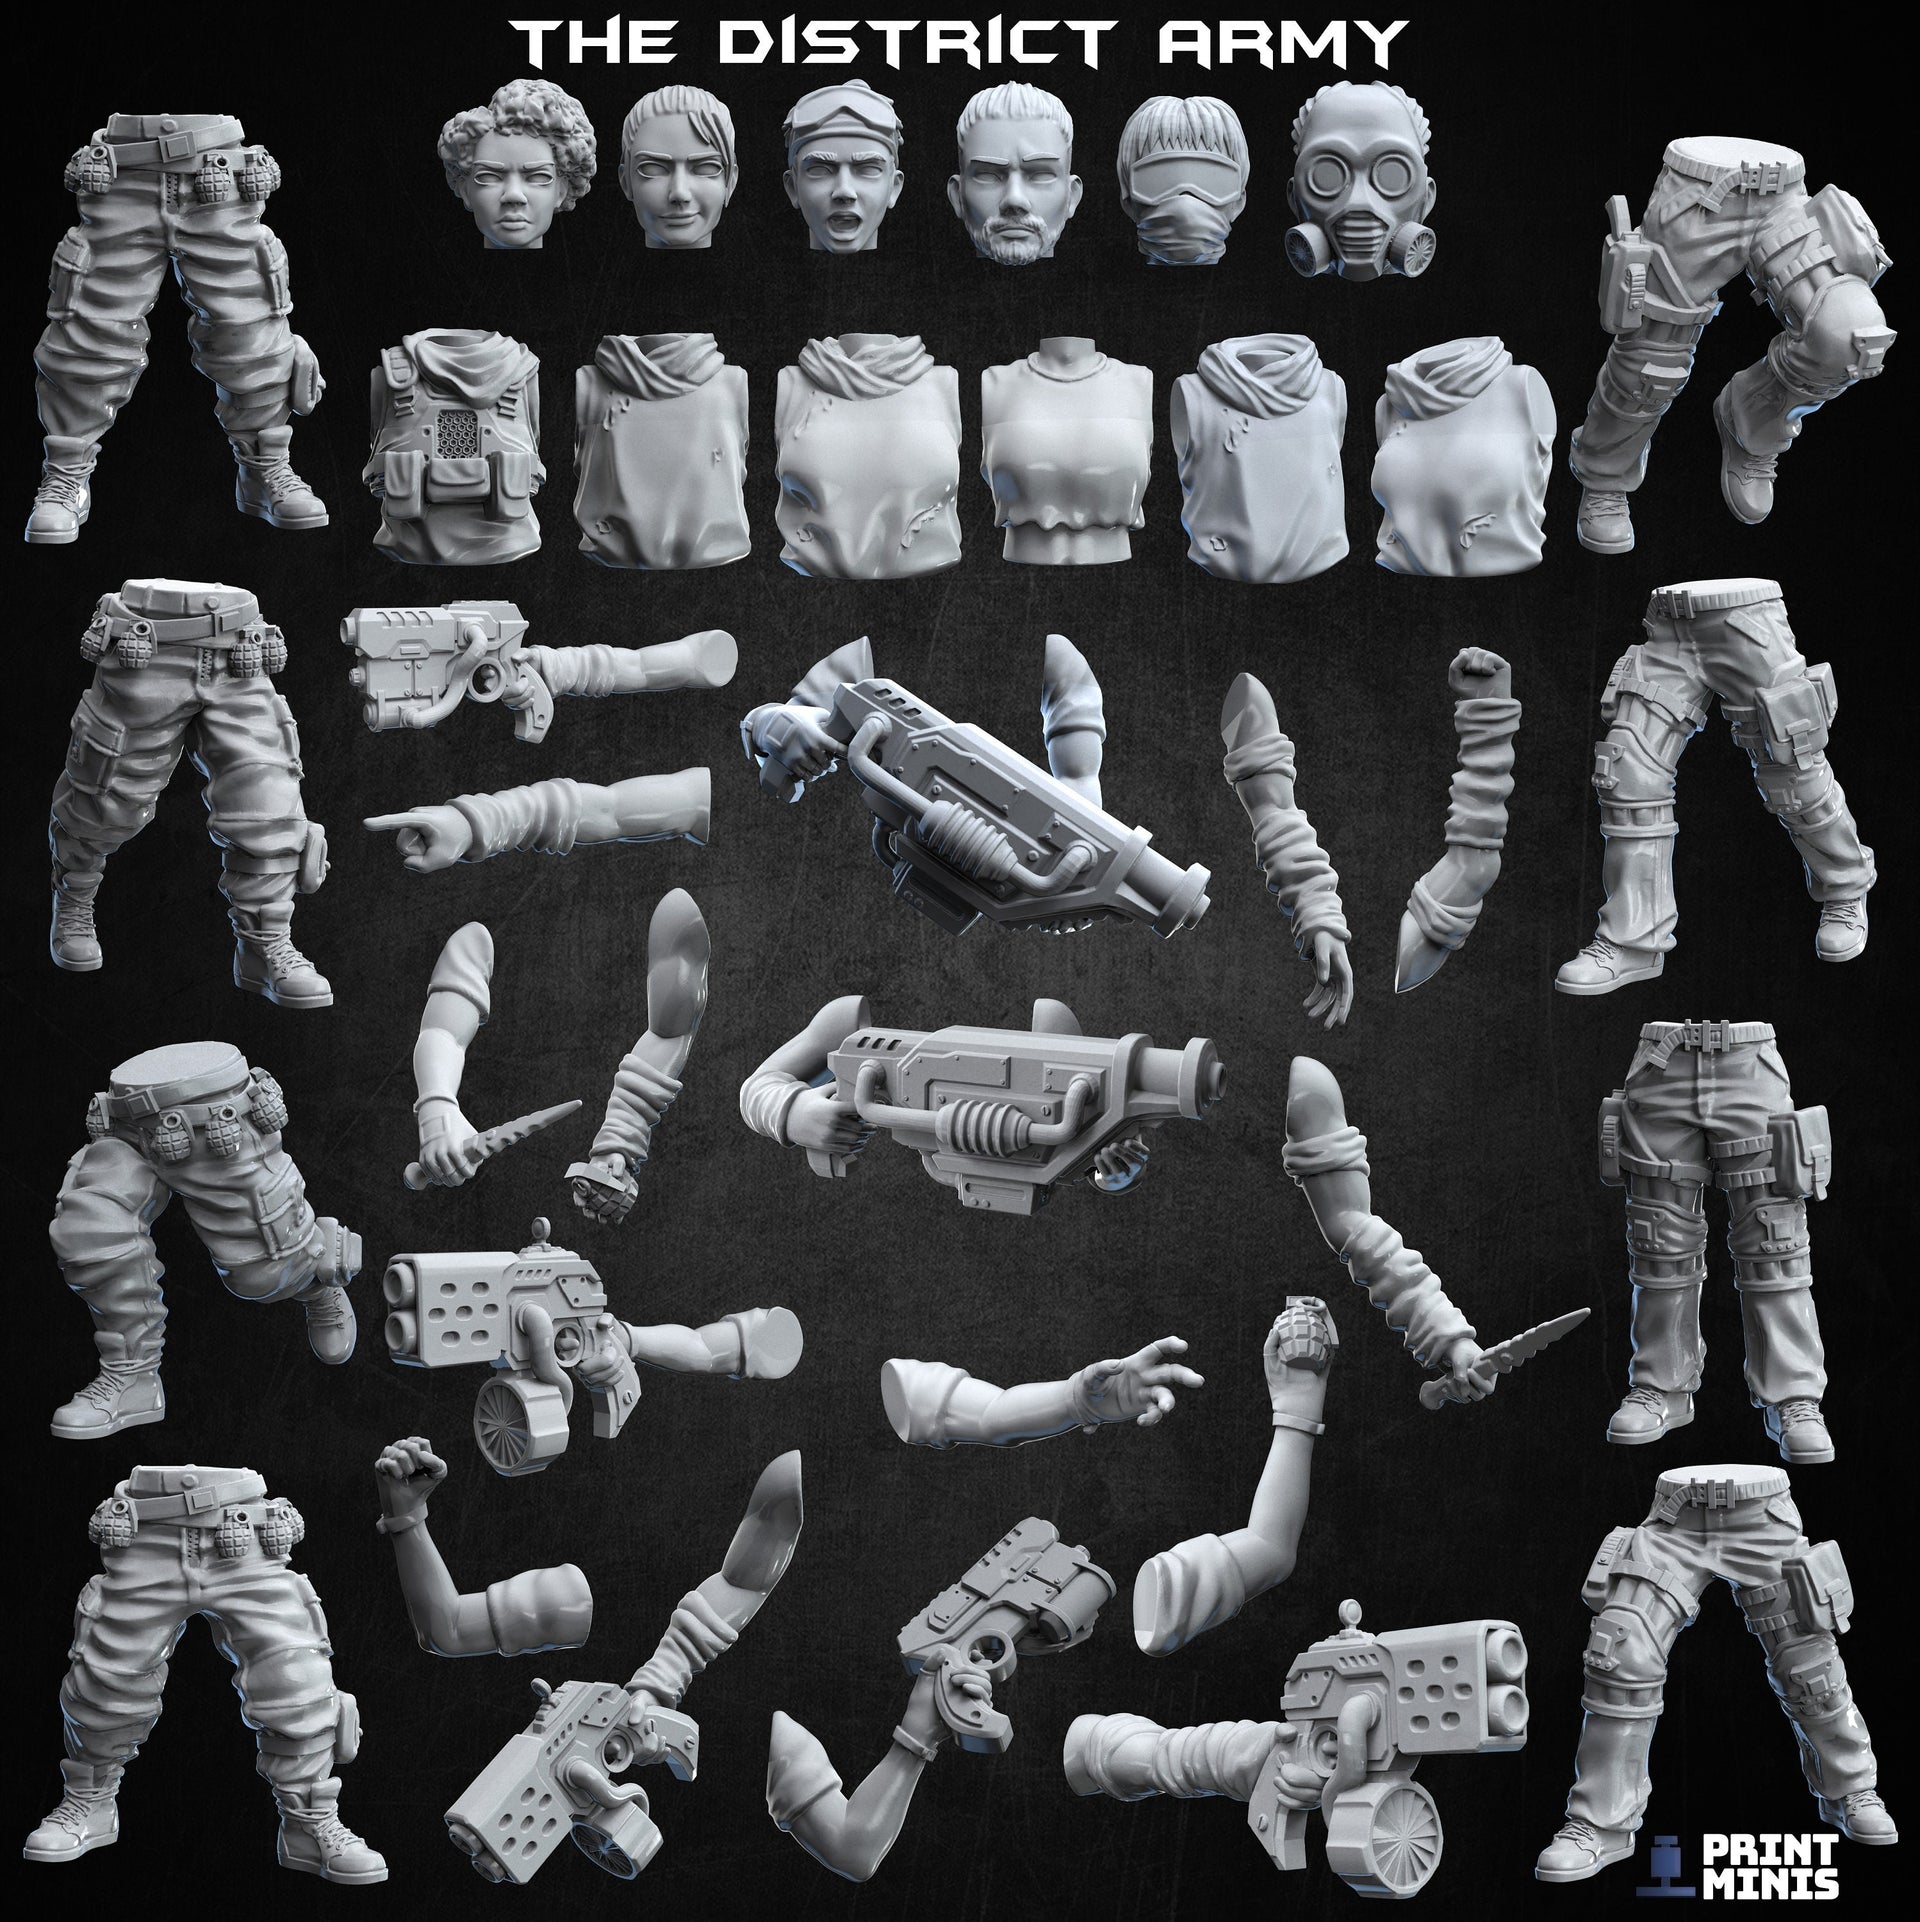 Modular District Army - Print Minis 